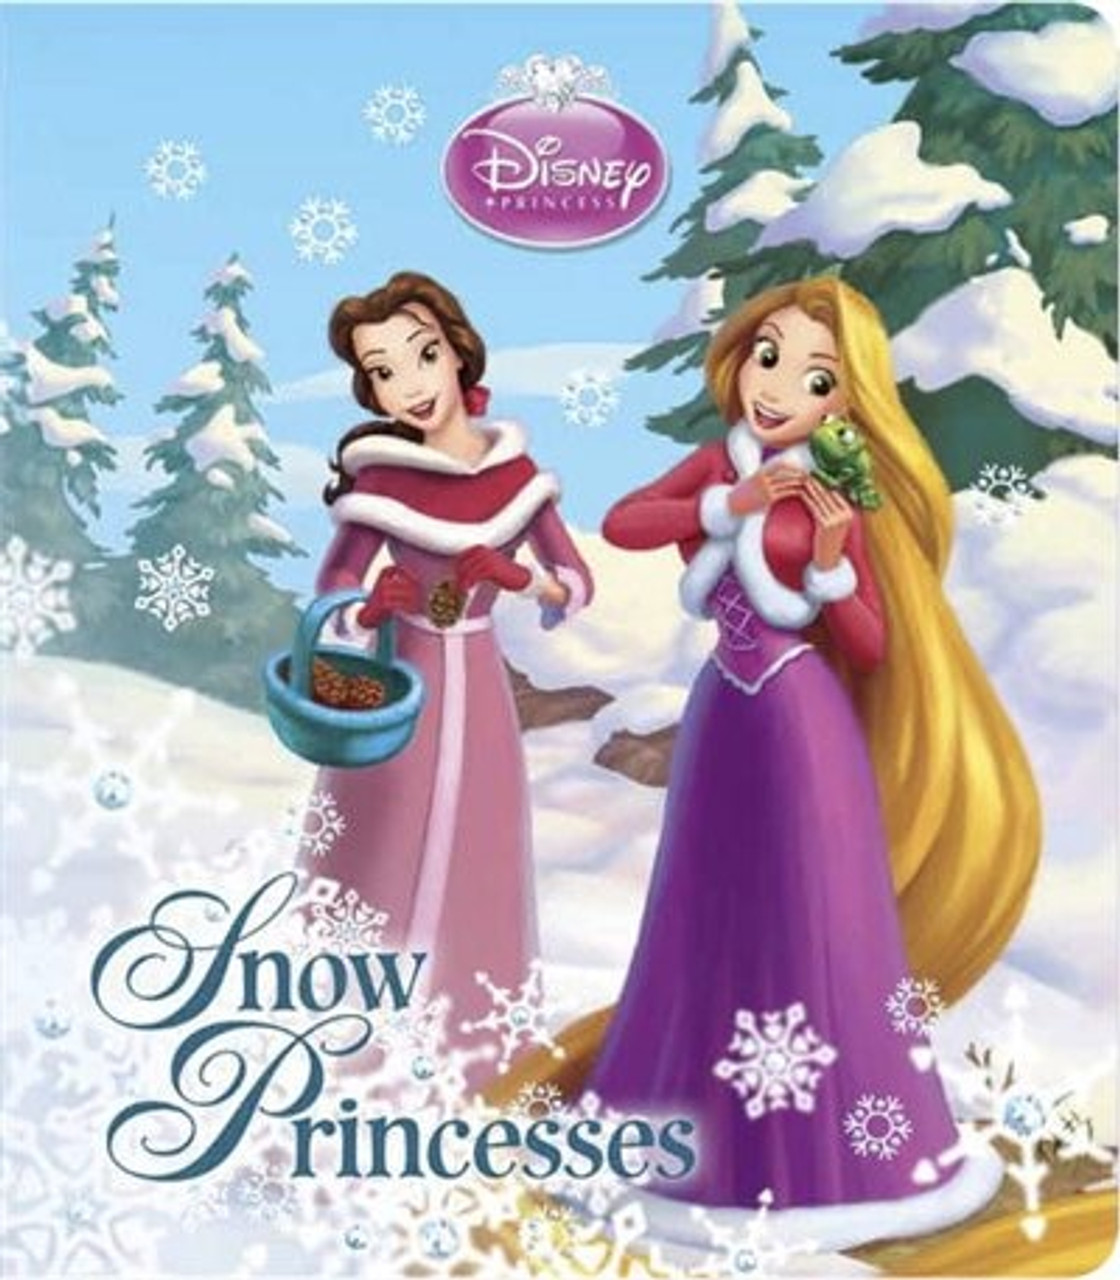 Disney Princess: Snow Princesses (Board Book) While Supplies Last*